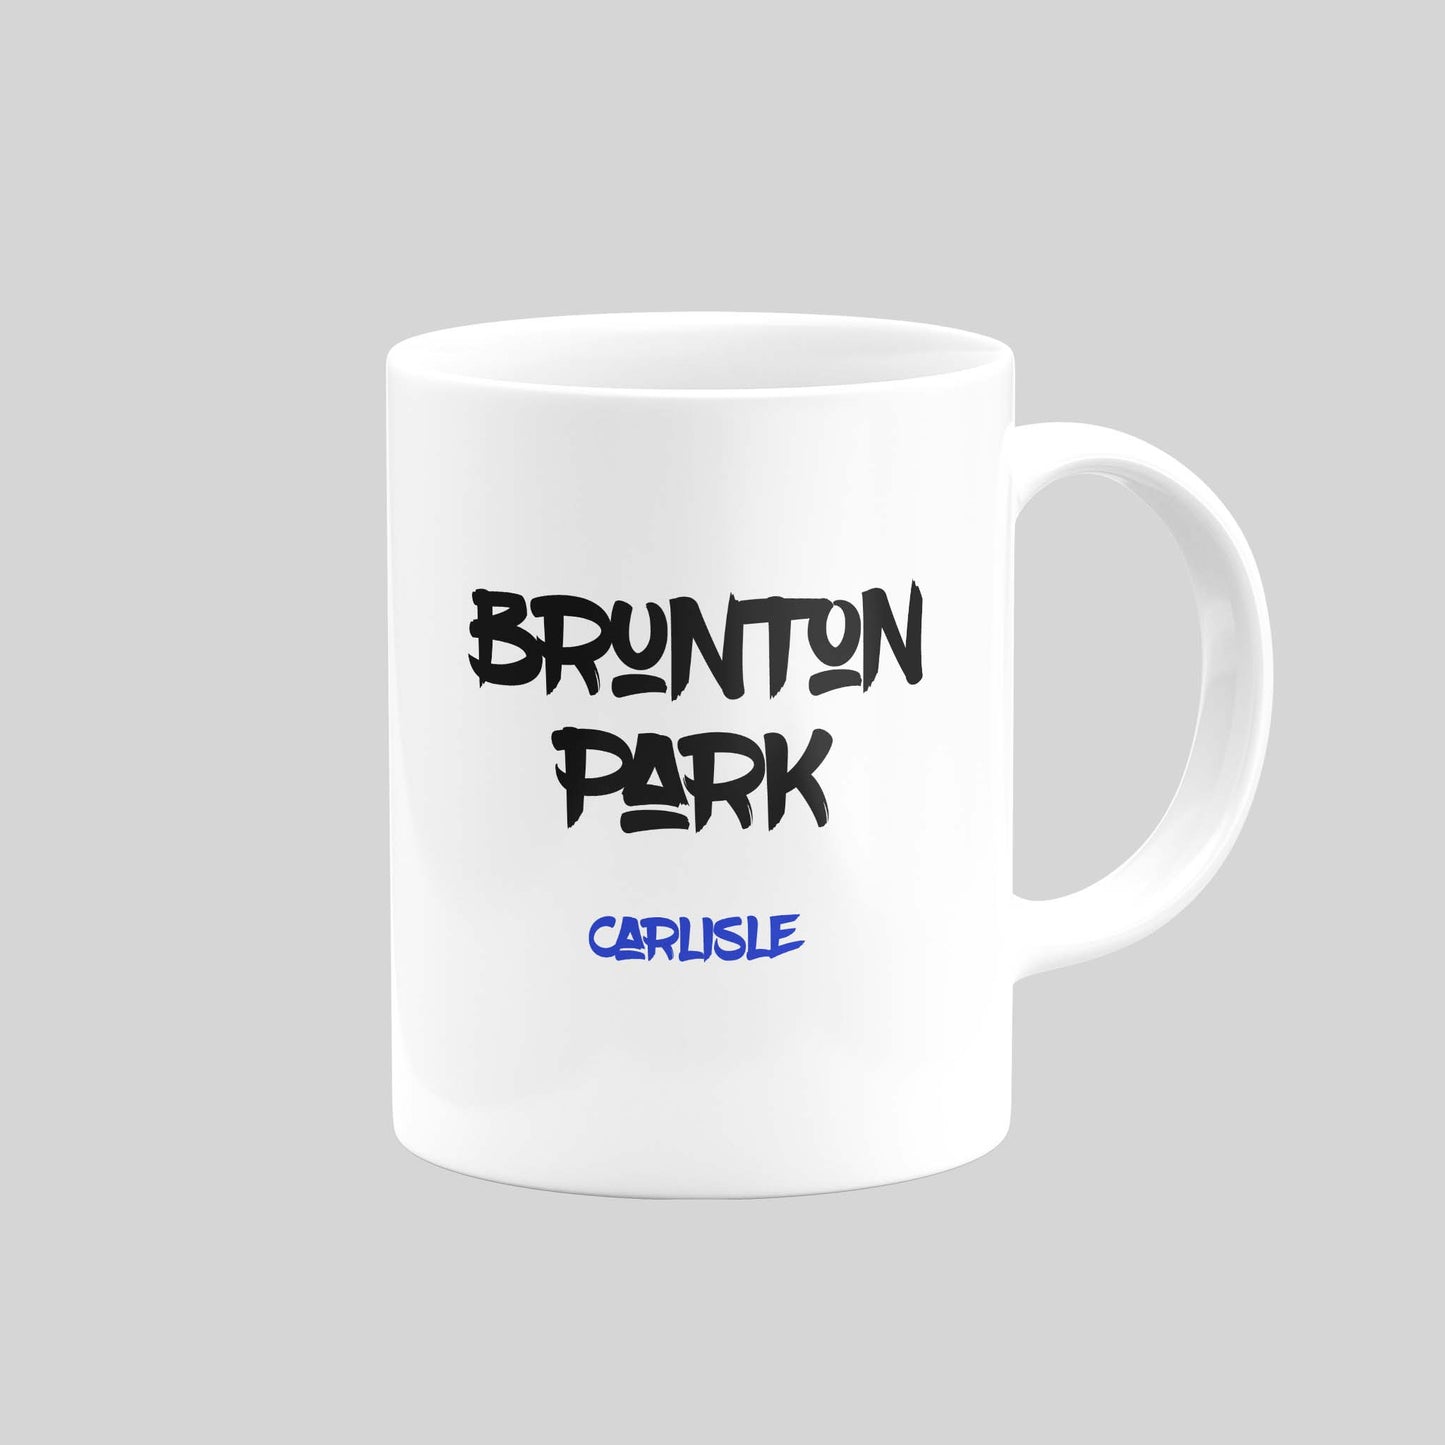 Brunton Park Mug